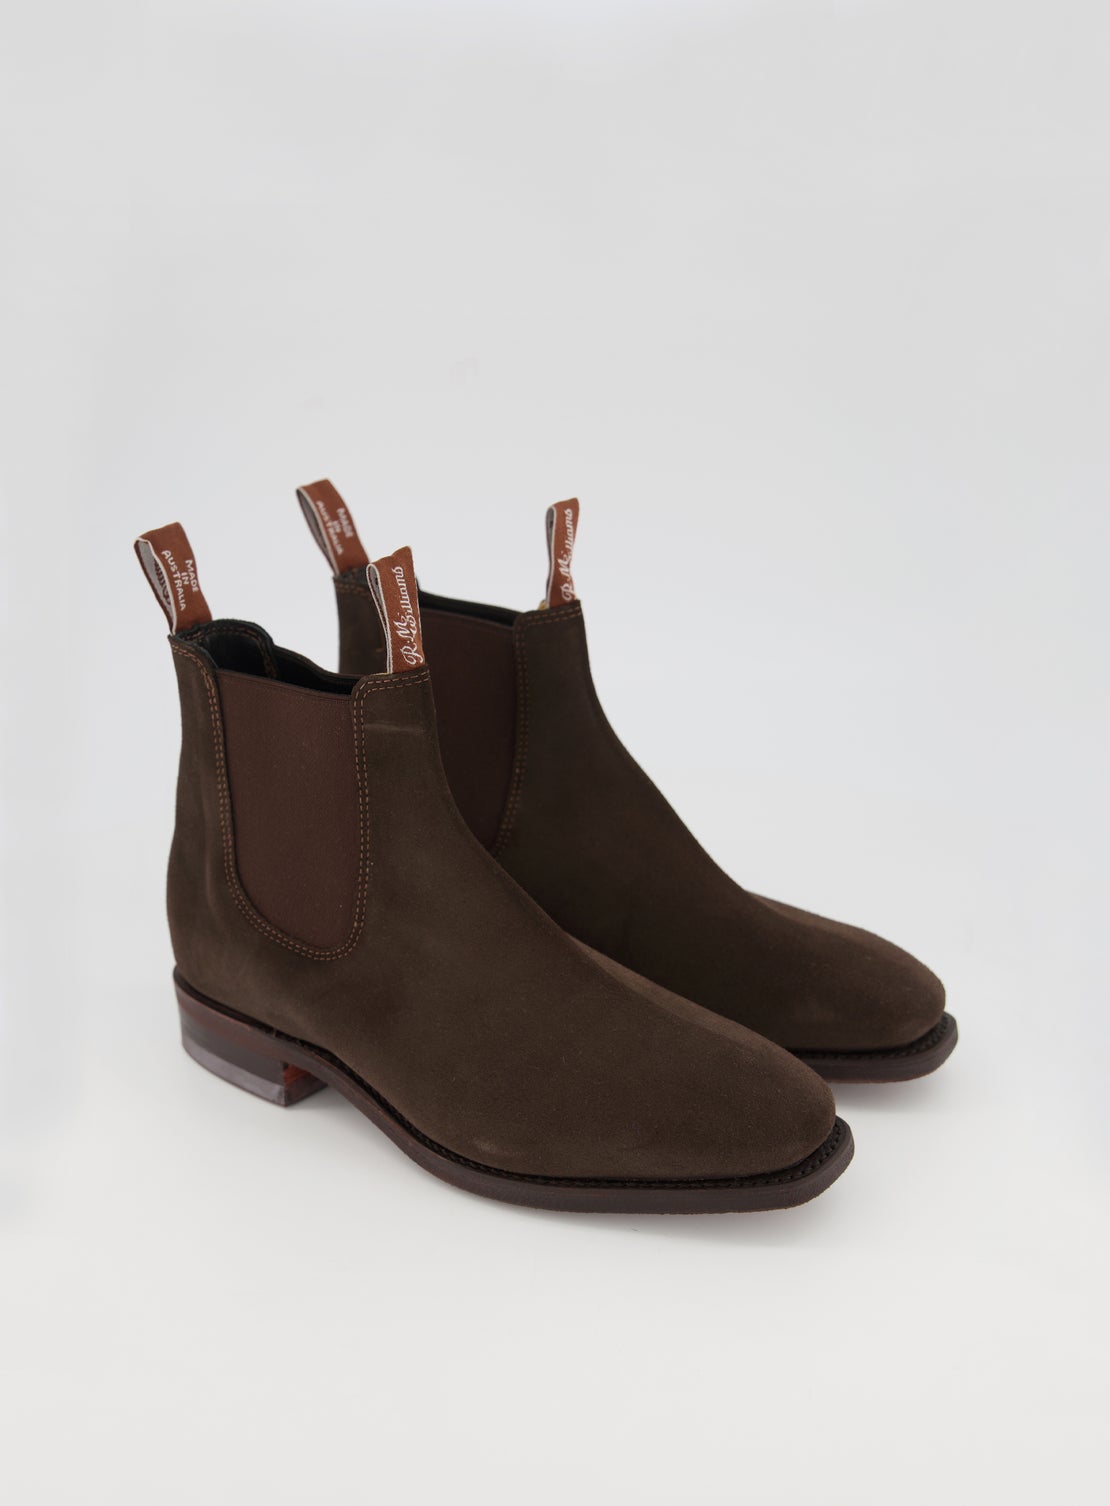 RM Williams Comfort Craftsman Boot - Chocolate Suede